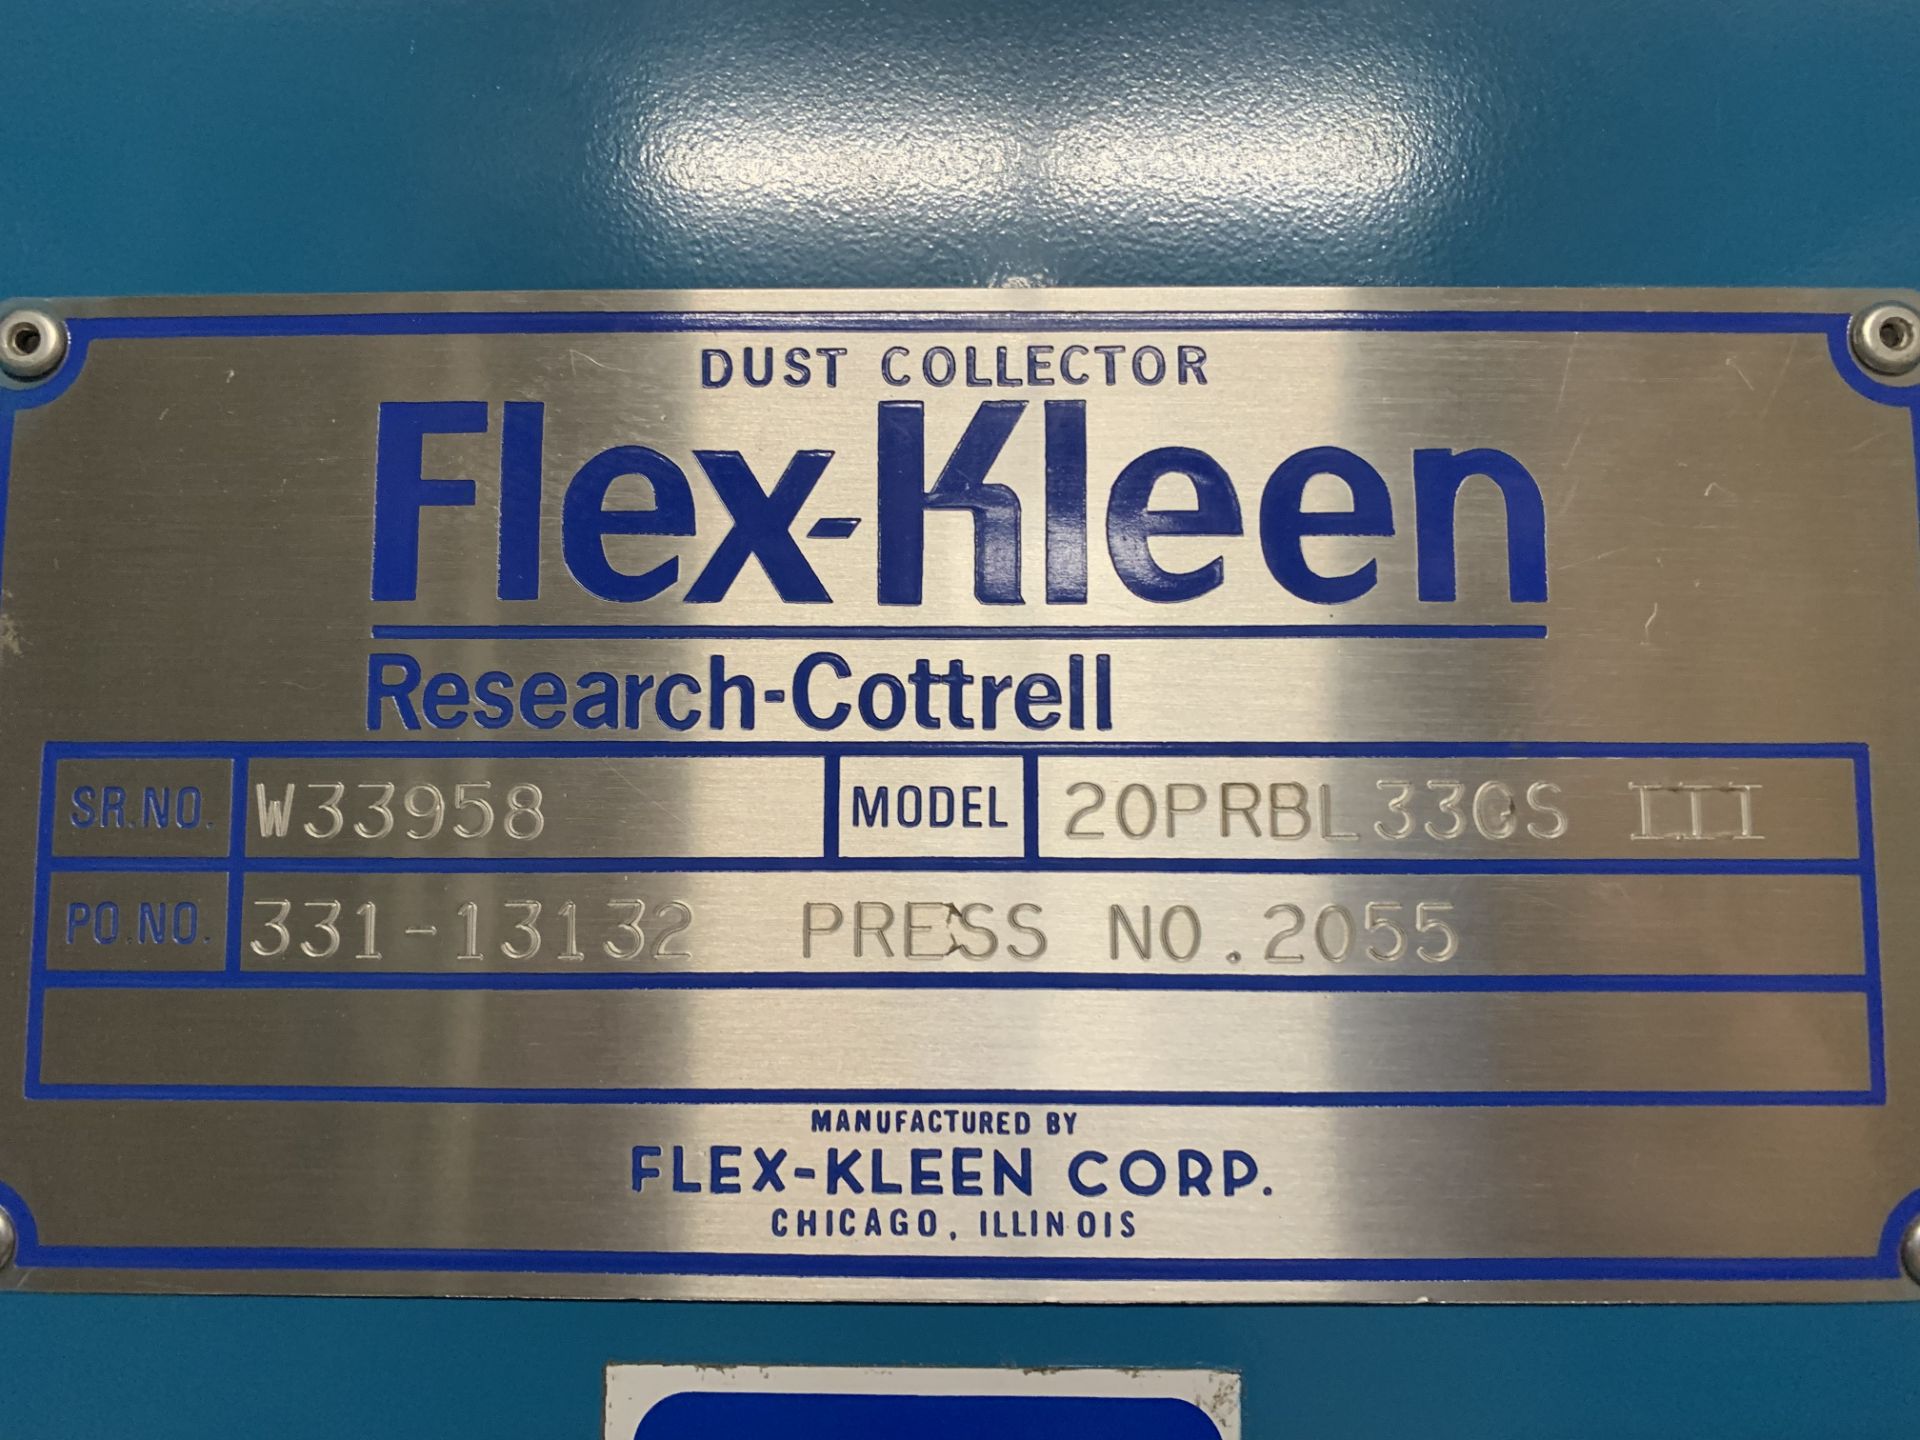 Flex - Kleen model 20PRBL33GS III Industrial Dust Collector s/n W33958 - Image 2 of 2